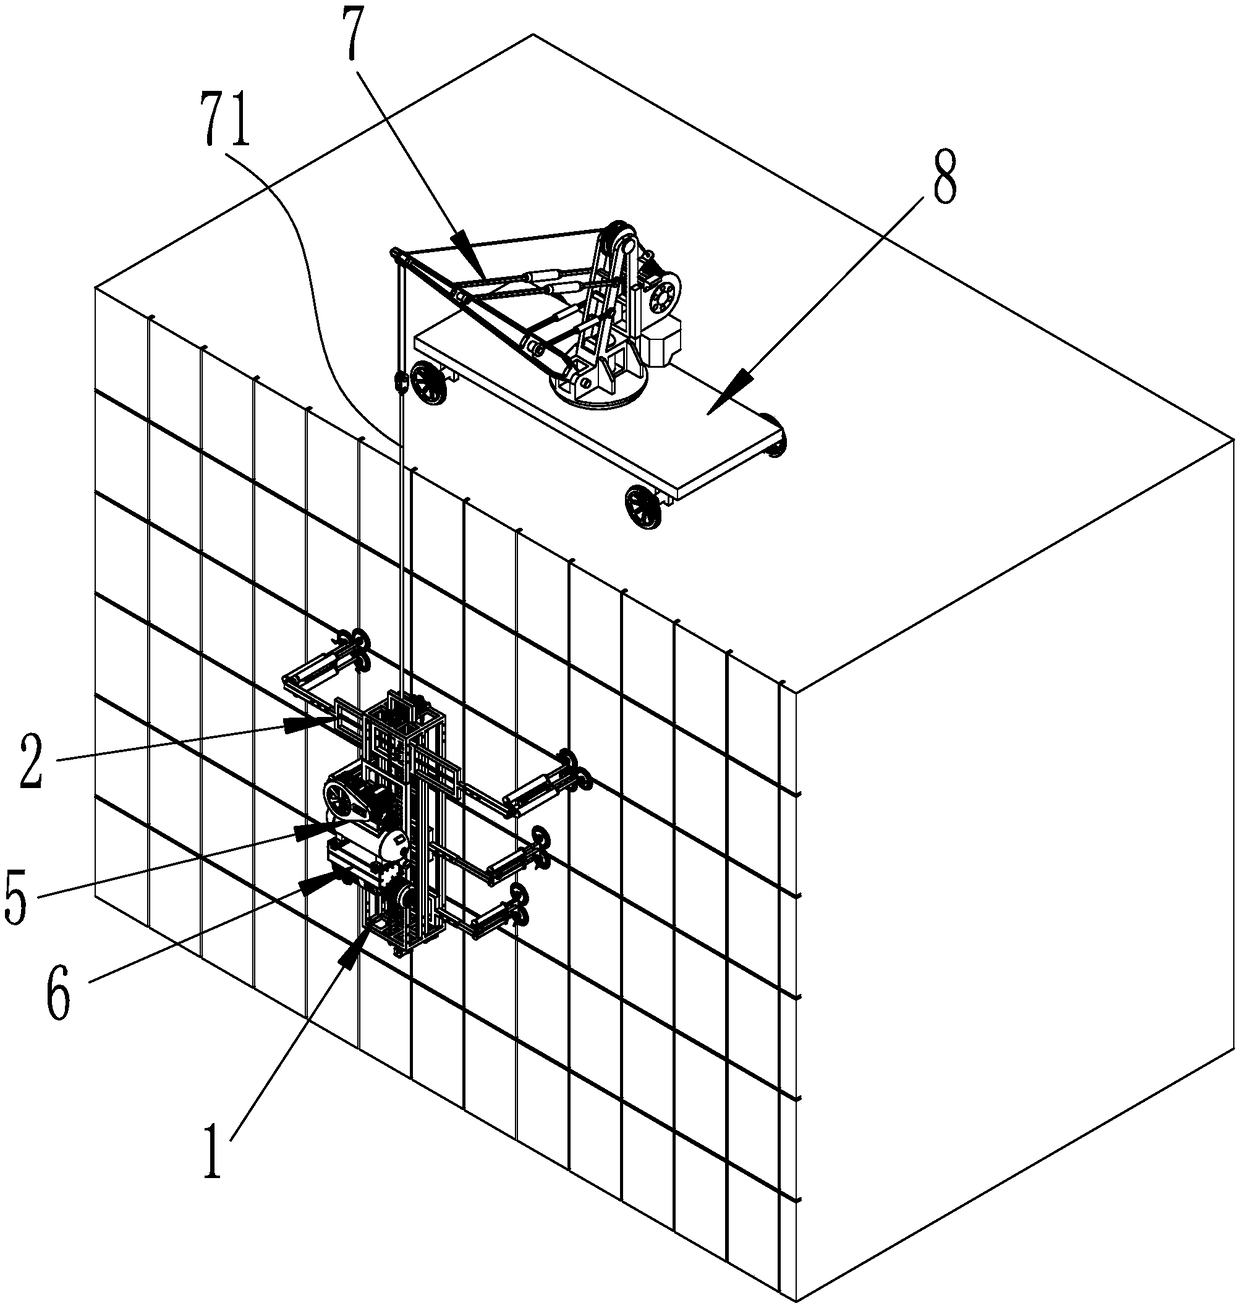 Multi-layer leg wall-climbing robot and wall-climbing loading system